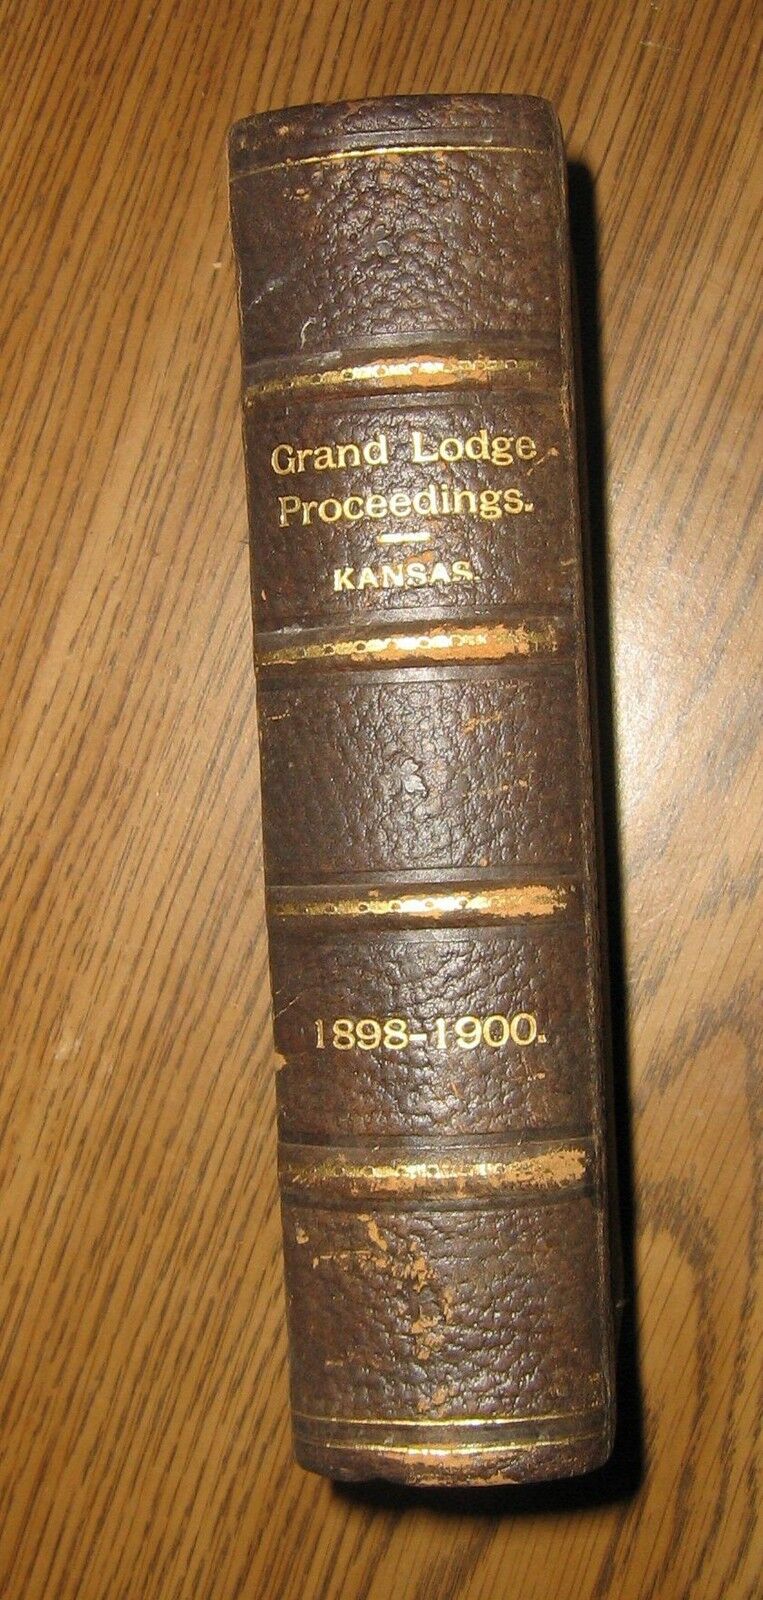 Vintage Proceedings of the Grand Lodge of Kansas,1898-1900,Freemasonry, Masonic